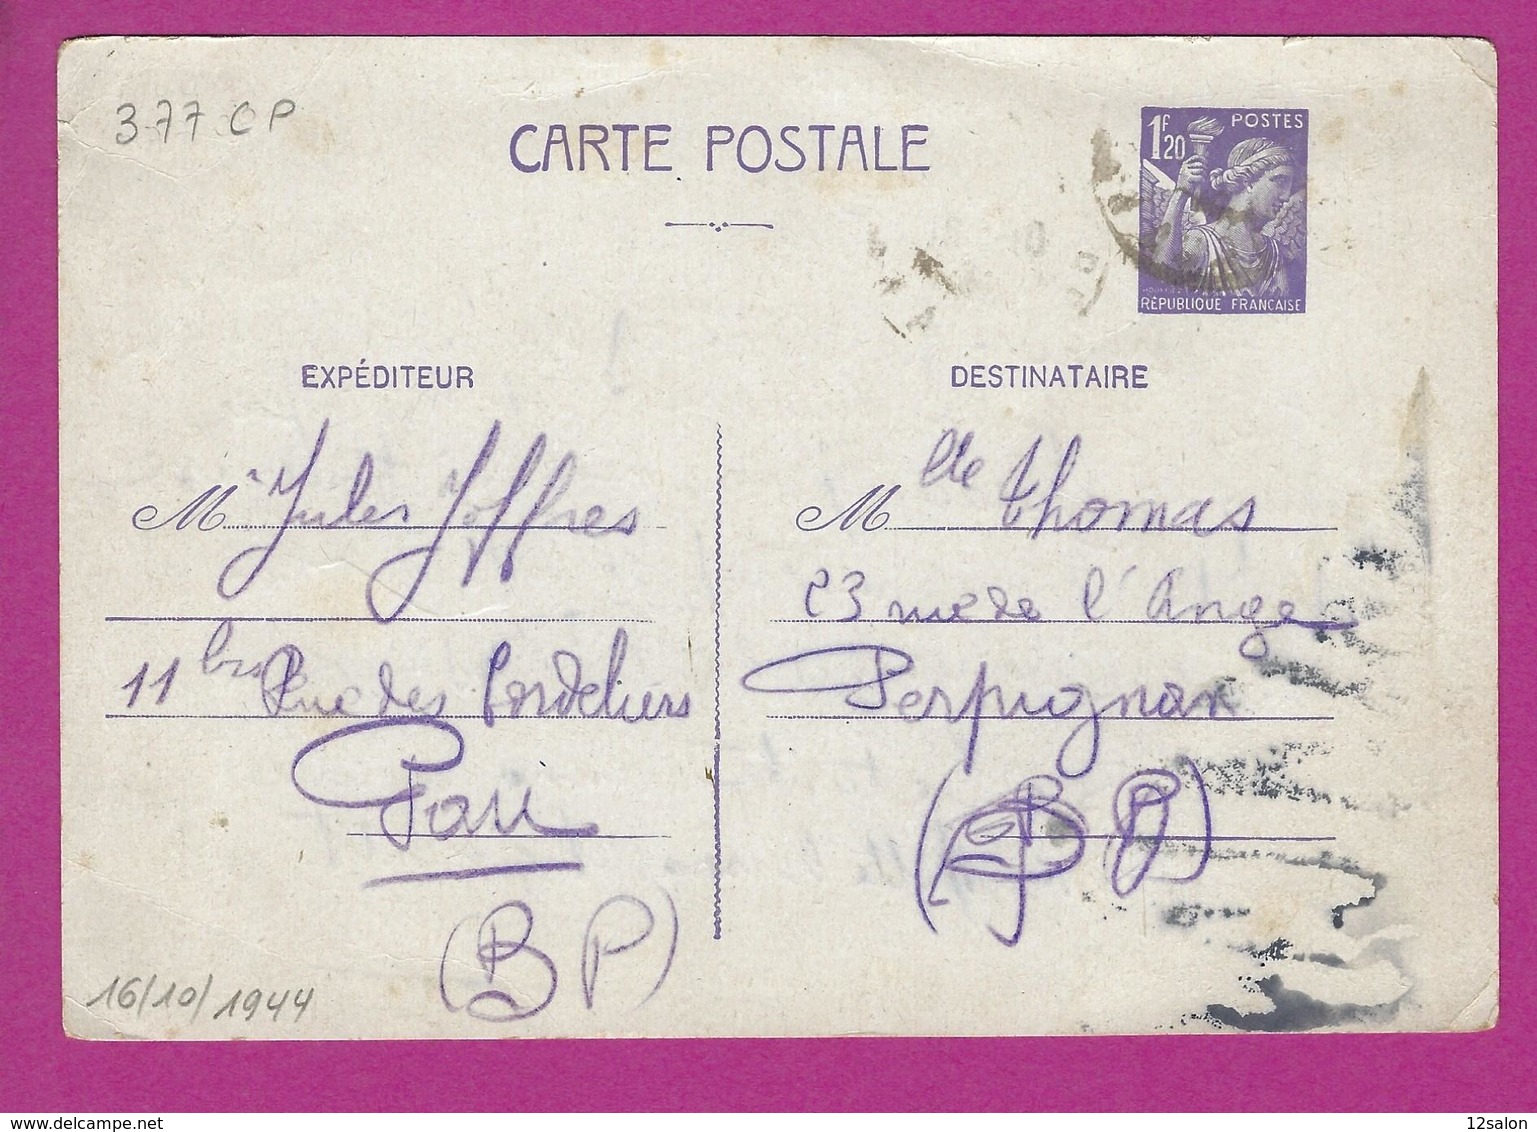 ENTIERS POSTAUX CARTE POSTALE  TYPE IRIS  Obl PAU - Standard Postcards & Stamped On Demand (before 1995)